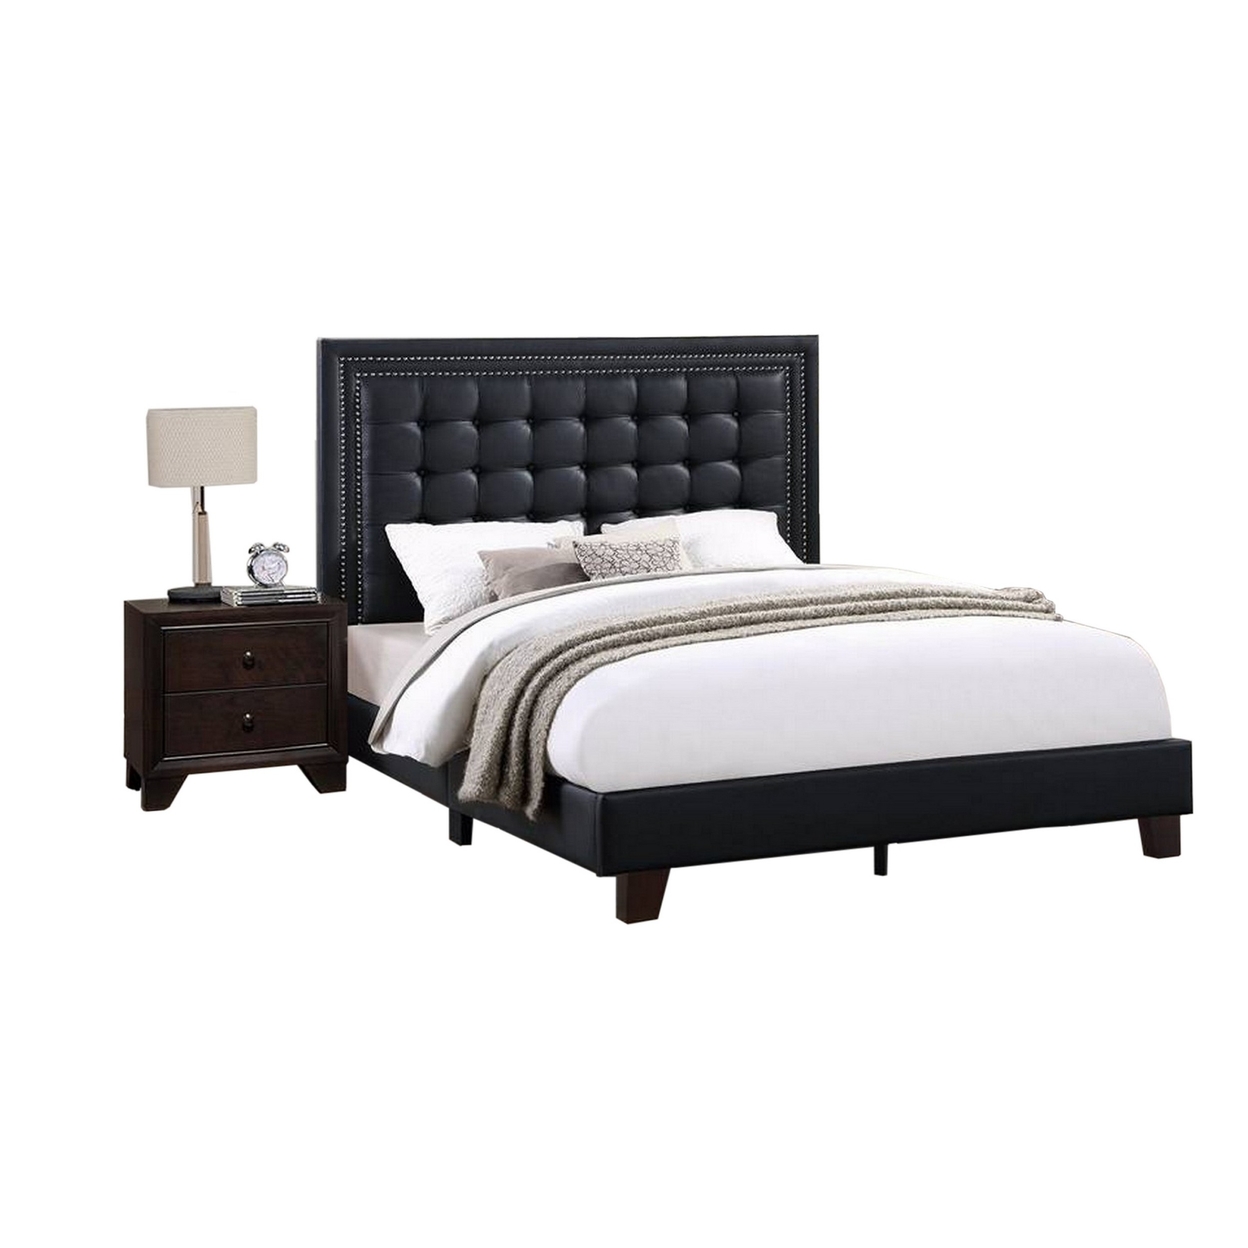 Vea Modern Platform Full Bed, Deep Tufted Upholstery, Black Faux Leather- Saltoro Sherpi